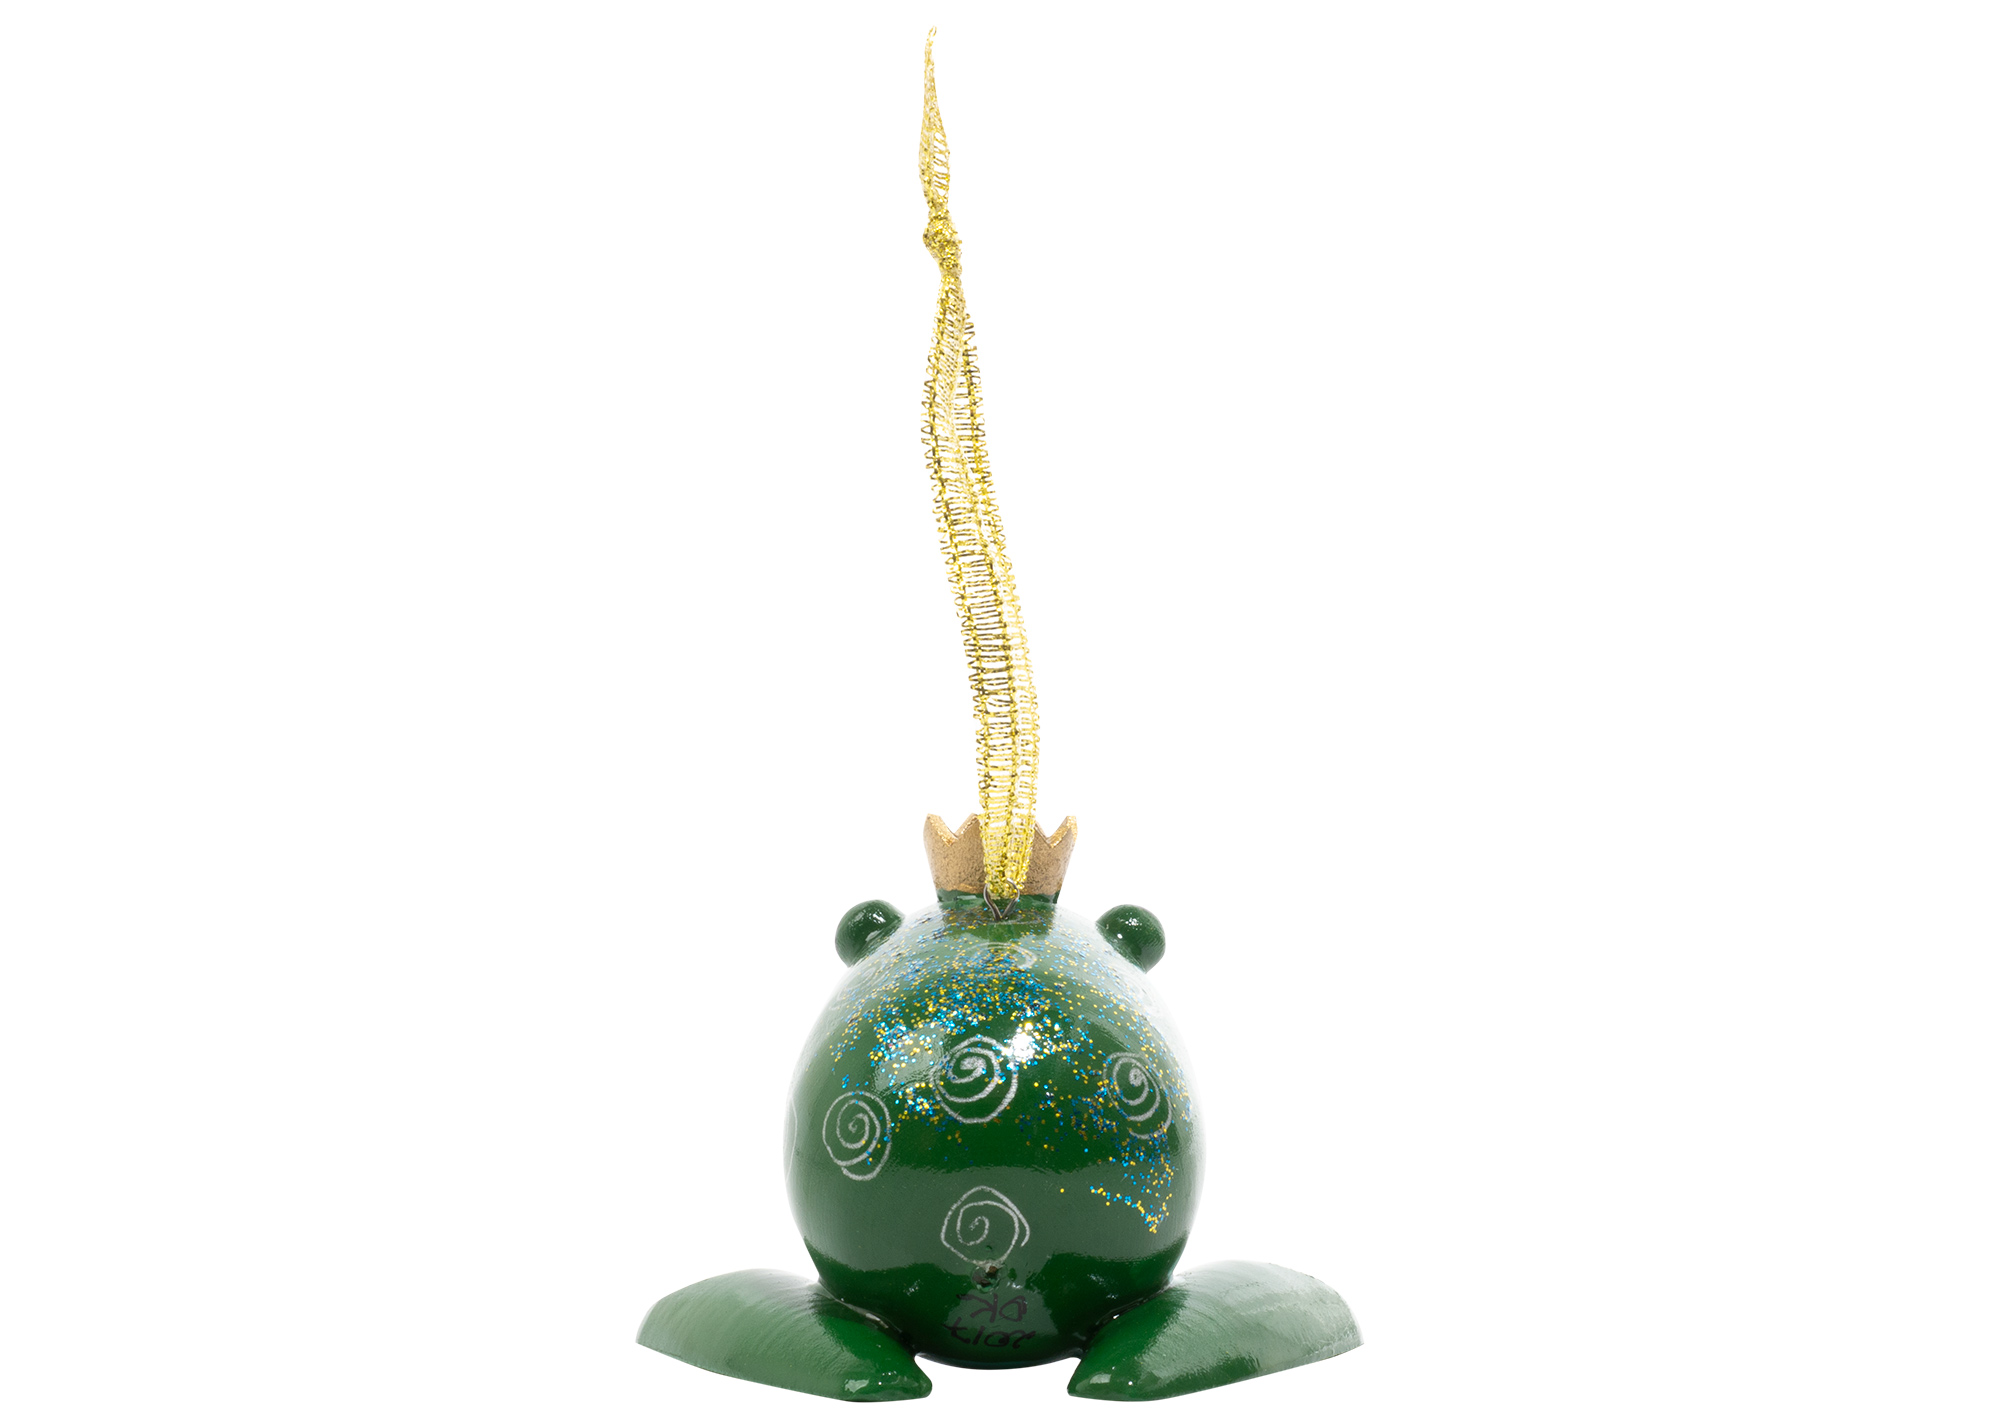 Buy Frog Prince Ornament 2" at GoldenCockerel.com